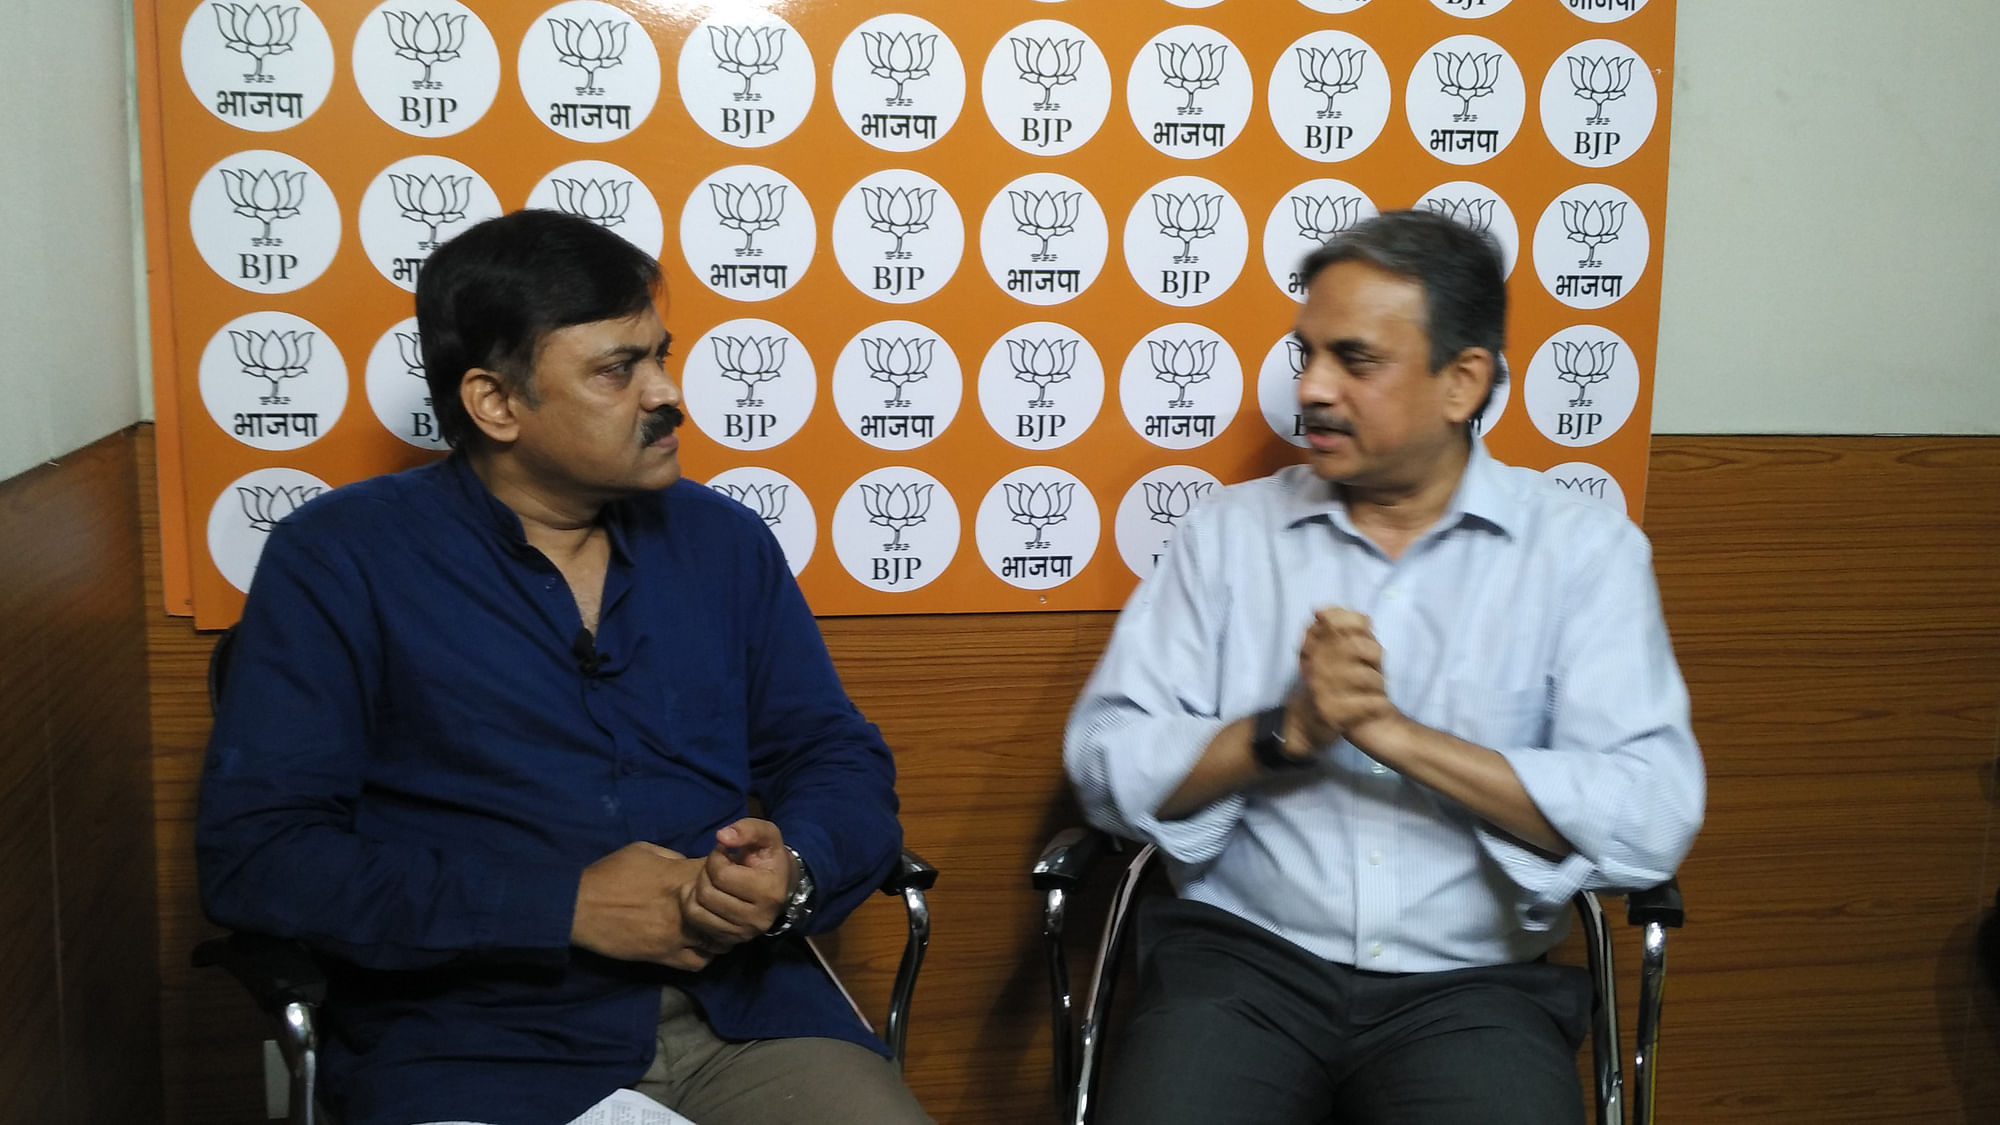 BJP Spokesperson GVL Narsimha Rao in conversation with Sanjay Pugalia (Photo: The Quint)